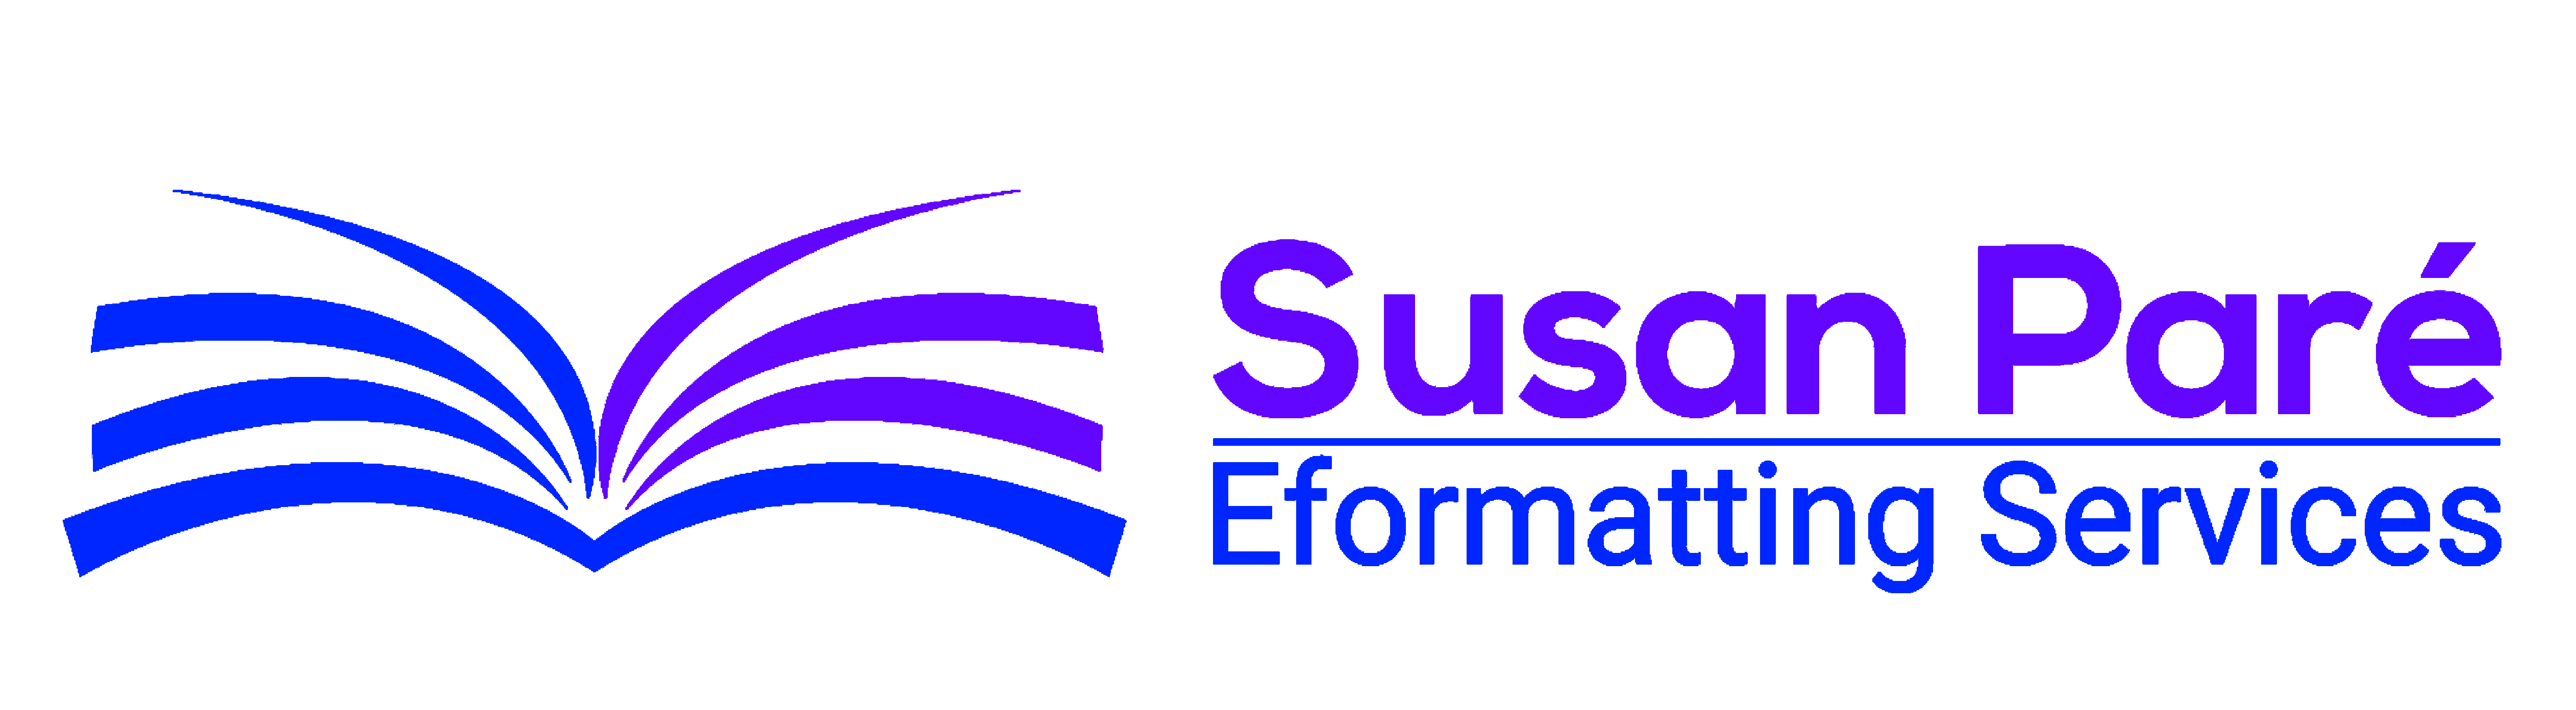 Susan Paré Eformatting Services logo